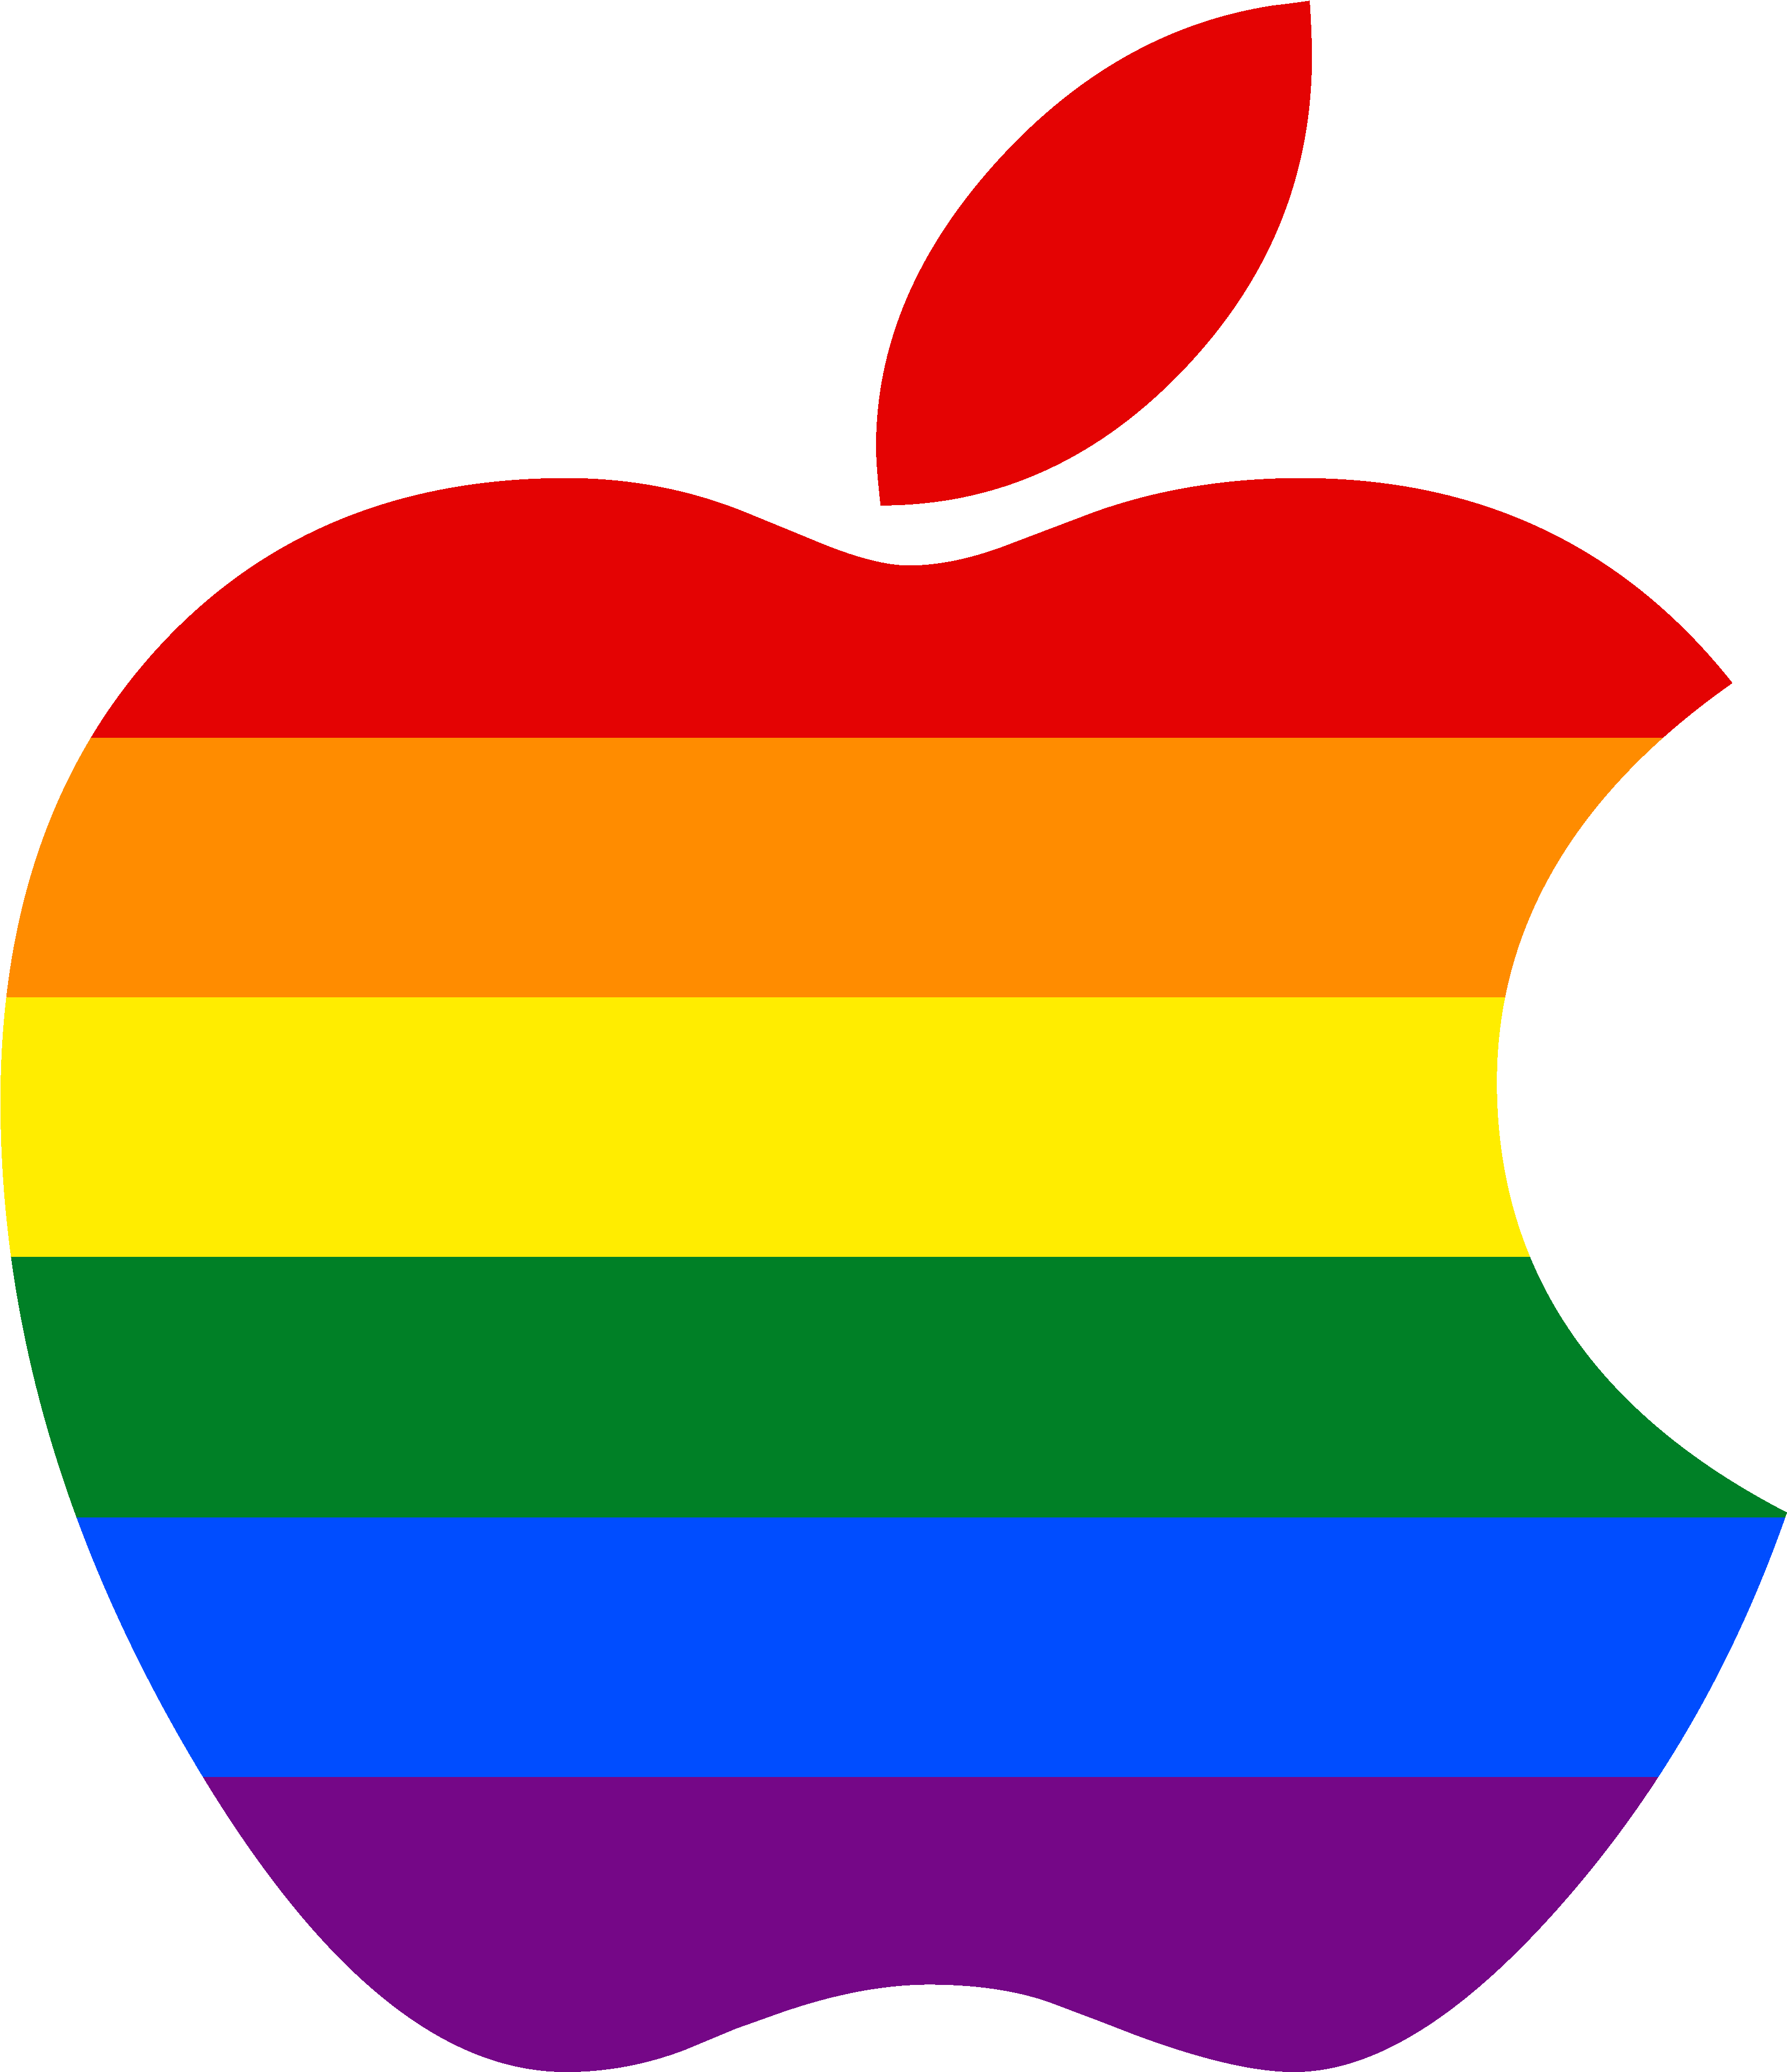 Apple Logo PNG Transparent Images - PNG All - Kiến Thức Cho Người lao ...